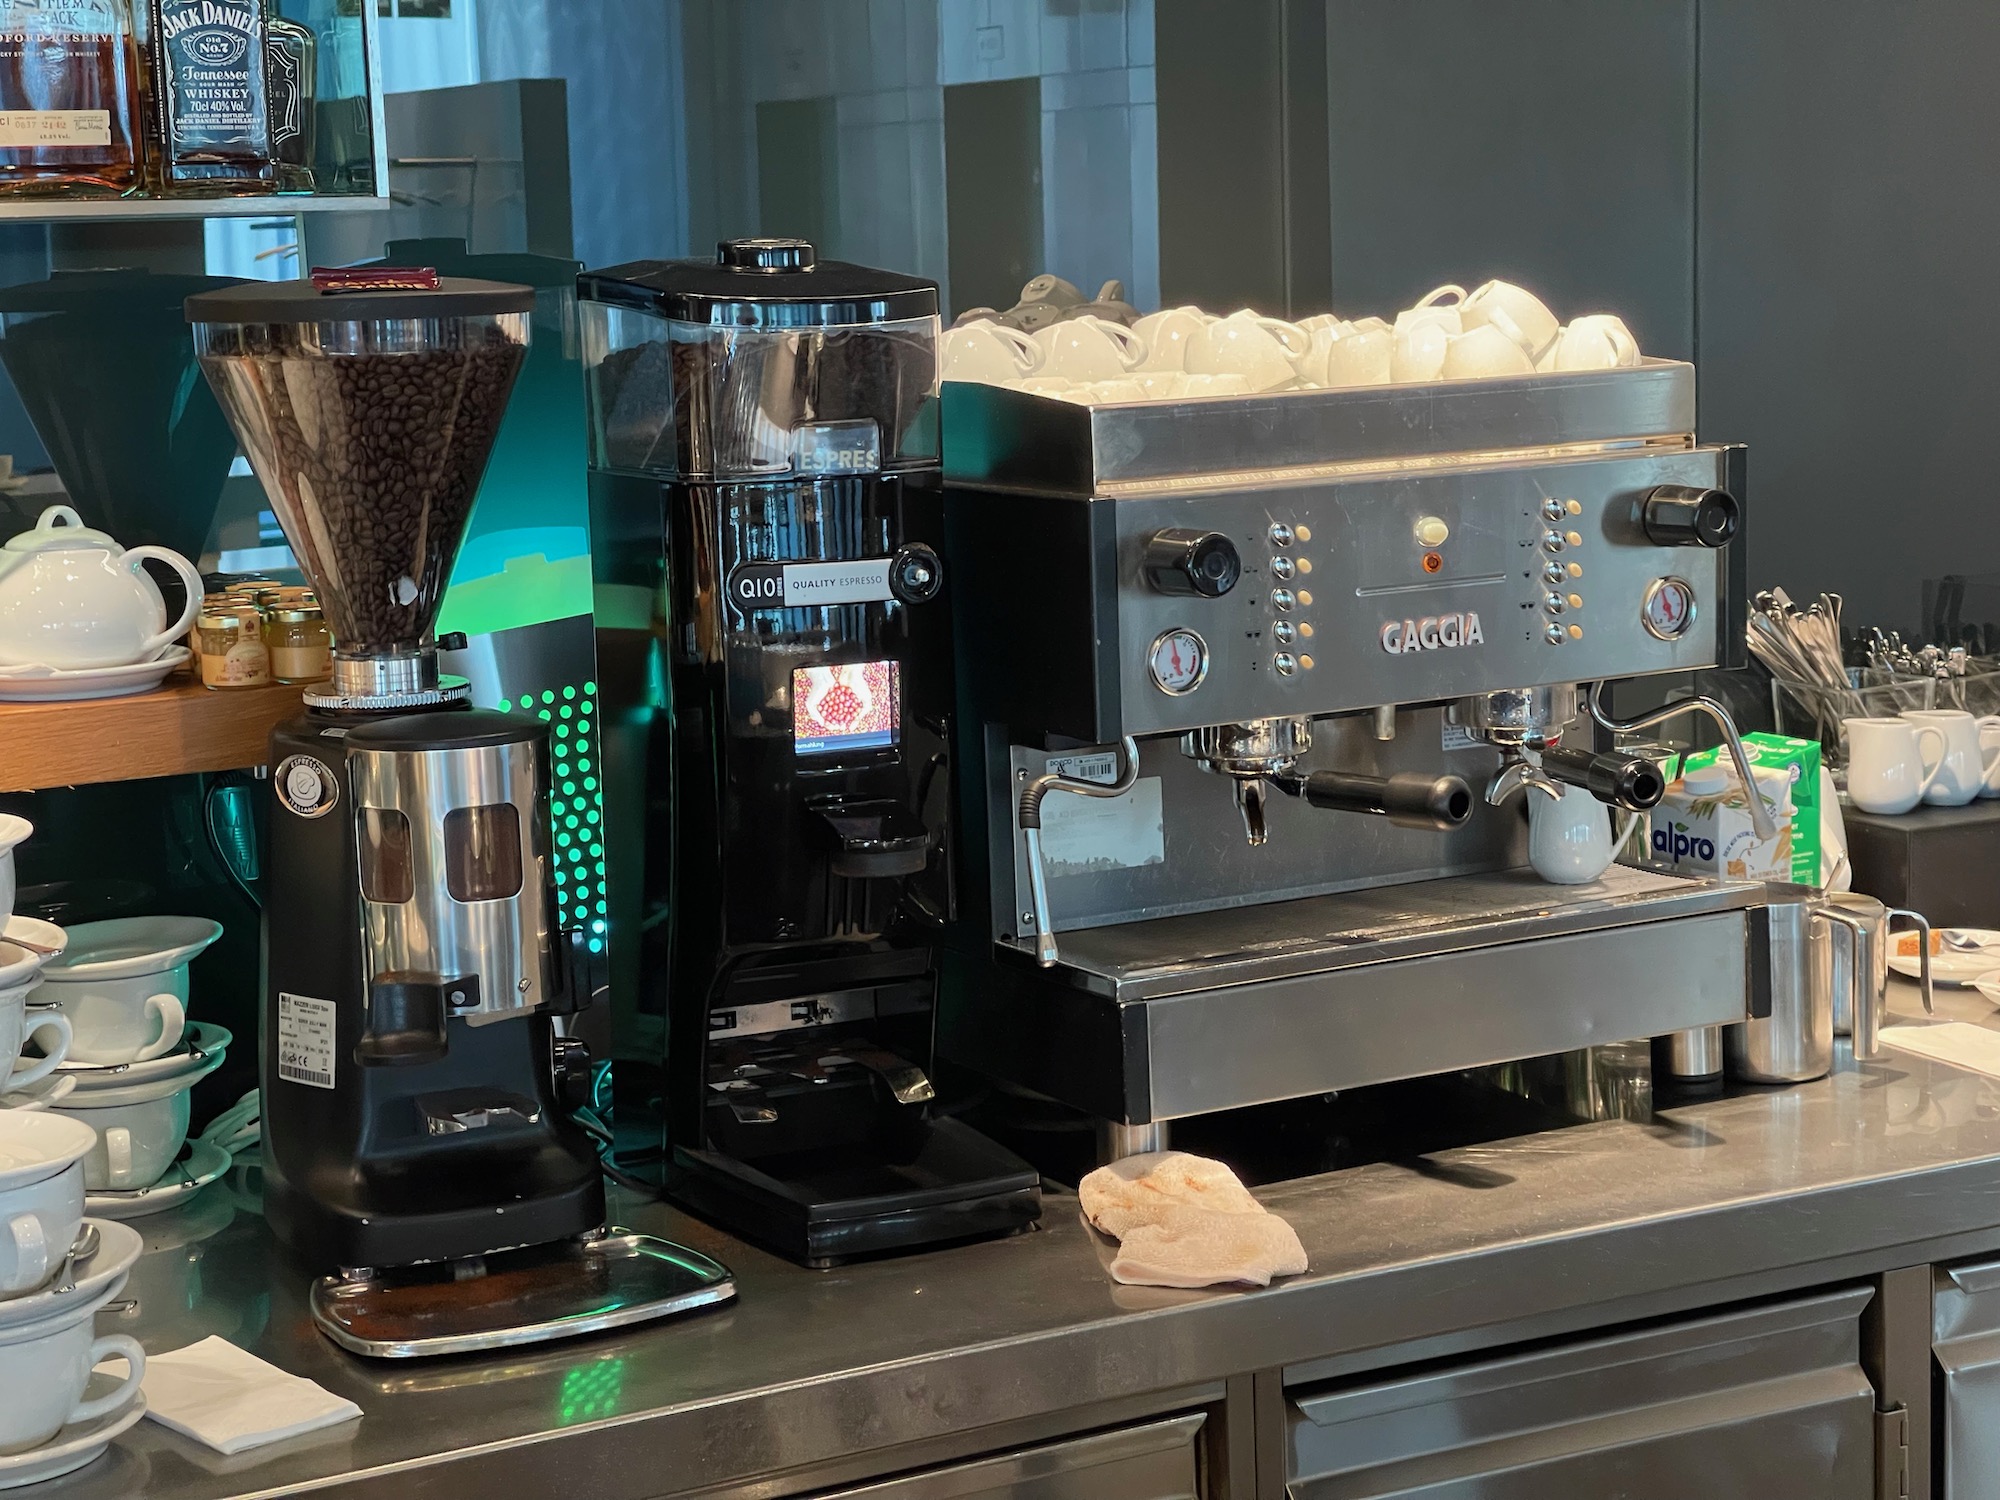 a coffee machine and a coffee maker